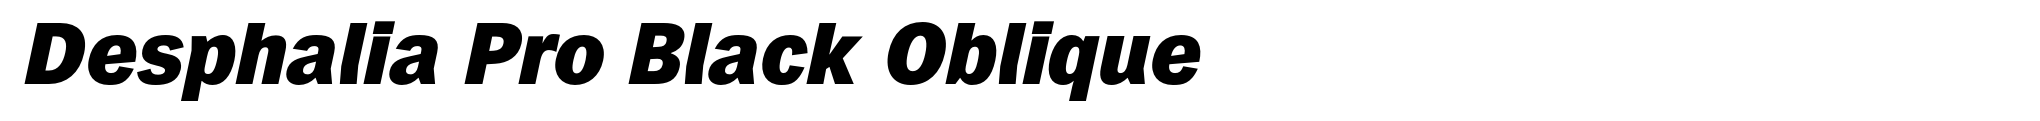 Desphalia Pro Black Oblique image